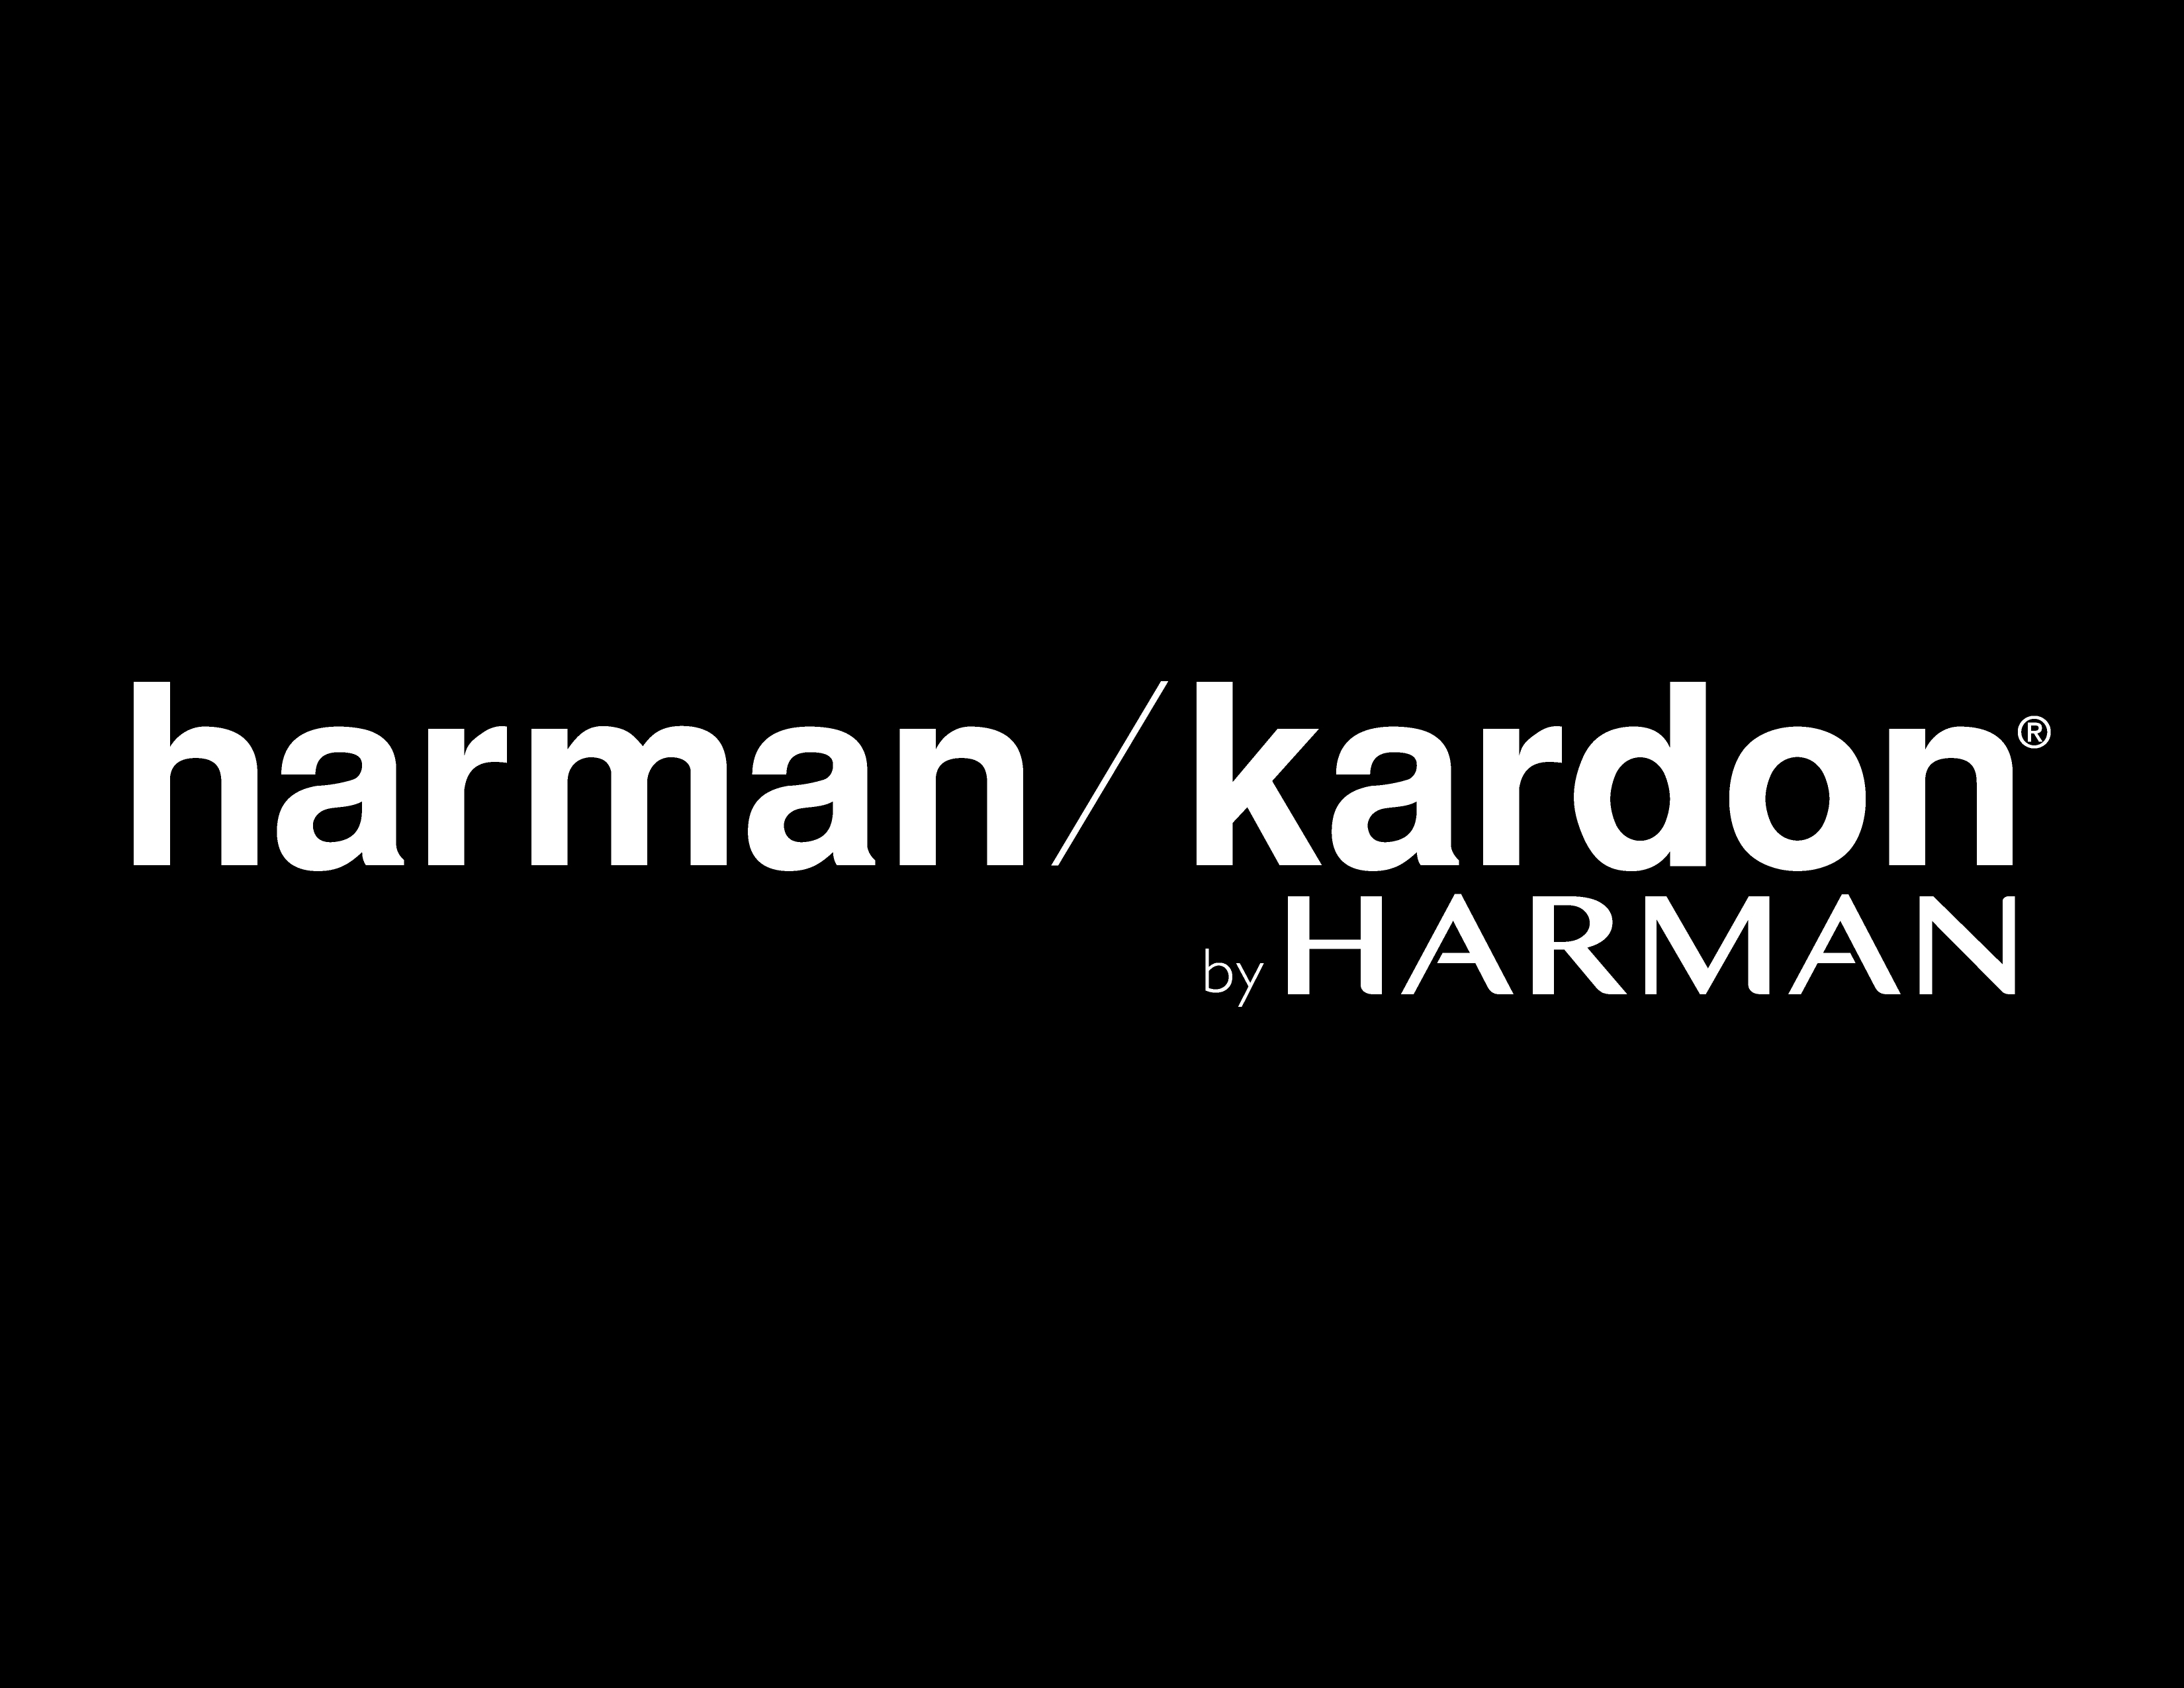 Car Audio Stickers Car-styling For Harman/kardon For Bmw E46 E90 E60 E39  E36 F30 Mercedes Benz W211 W203 W204 W210 W124 Amg W202 - Automotive  Interior | Fruugo NO